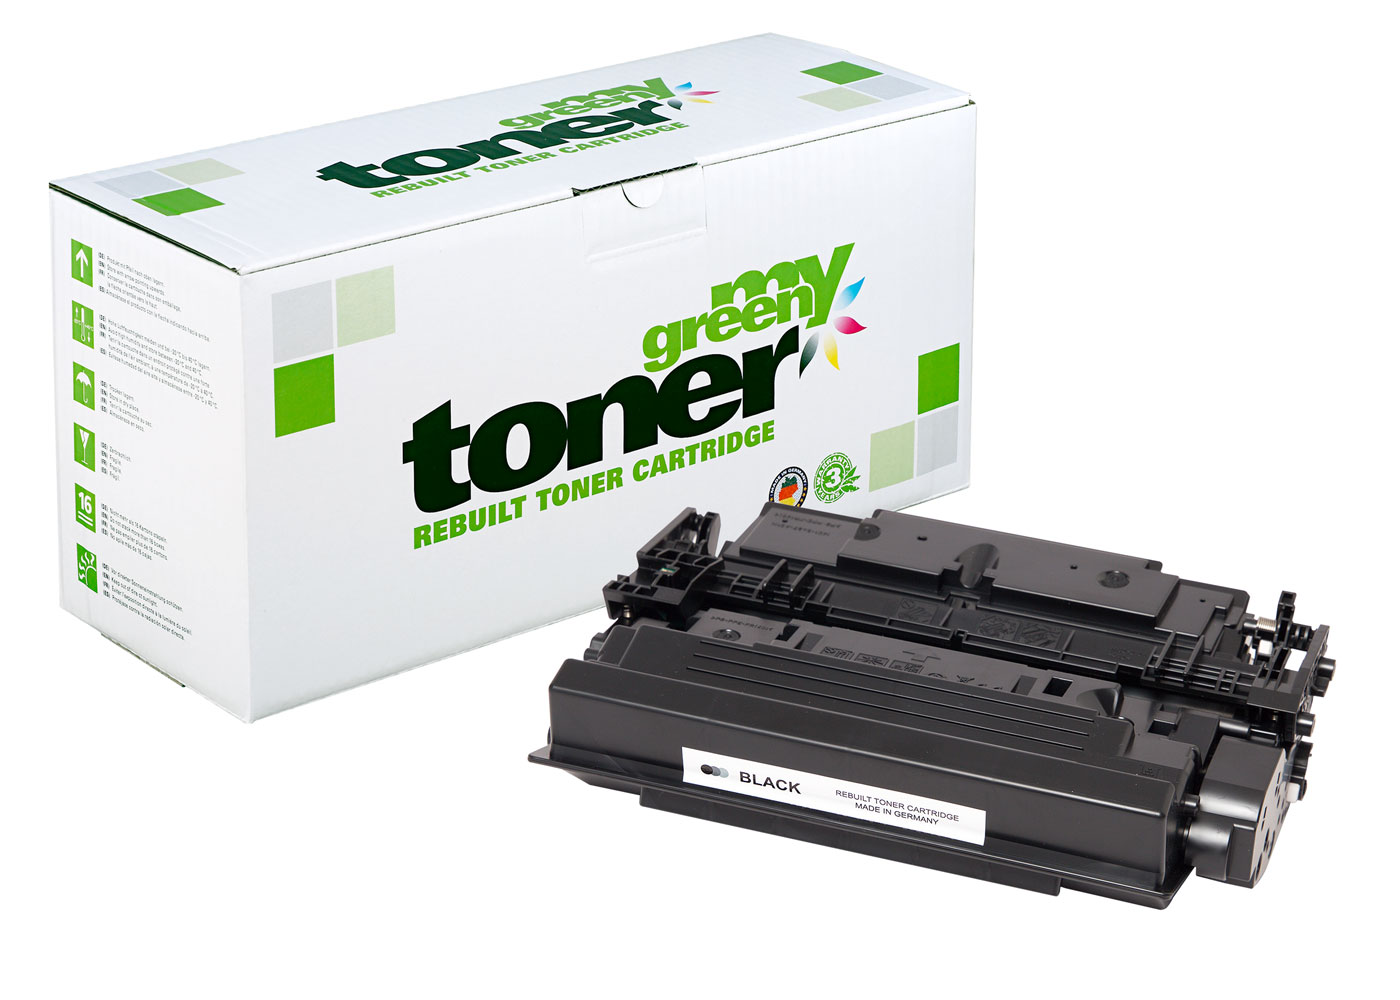 Rebuilt toner cartridge for HP LaserJet Enterprise M507 a. o.